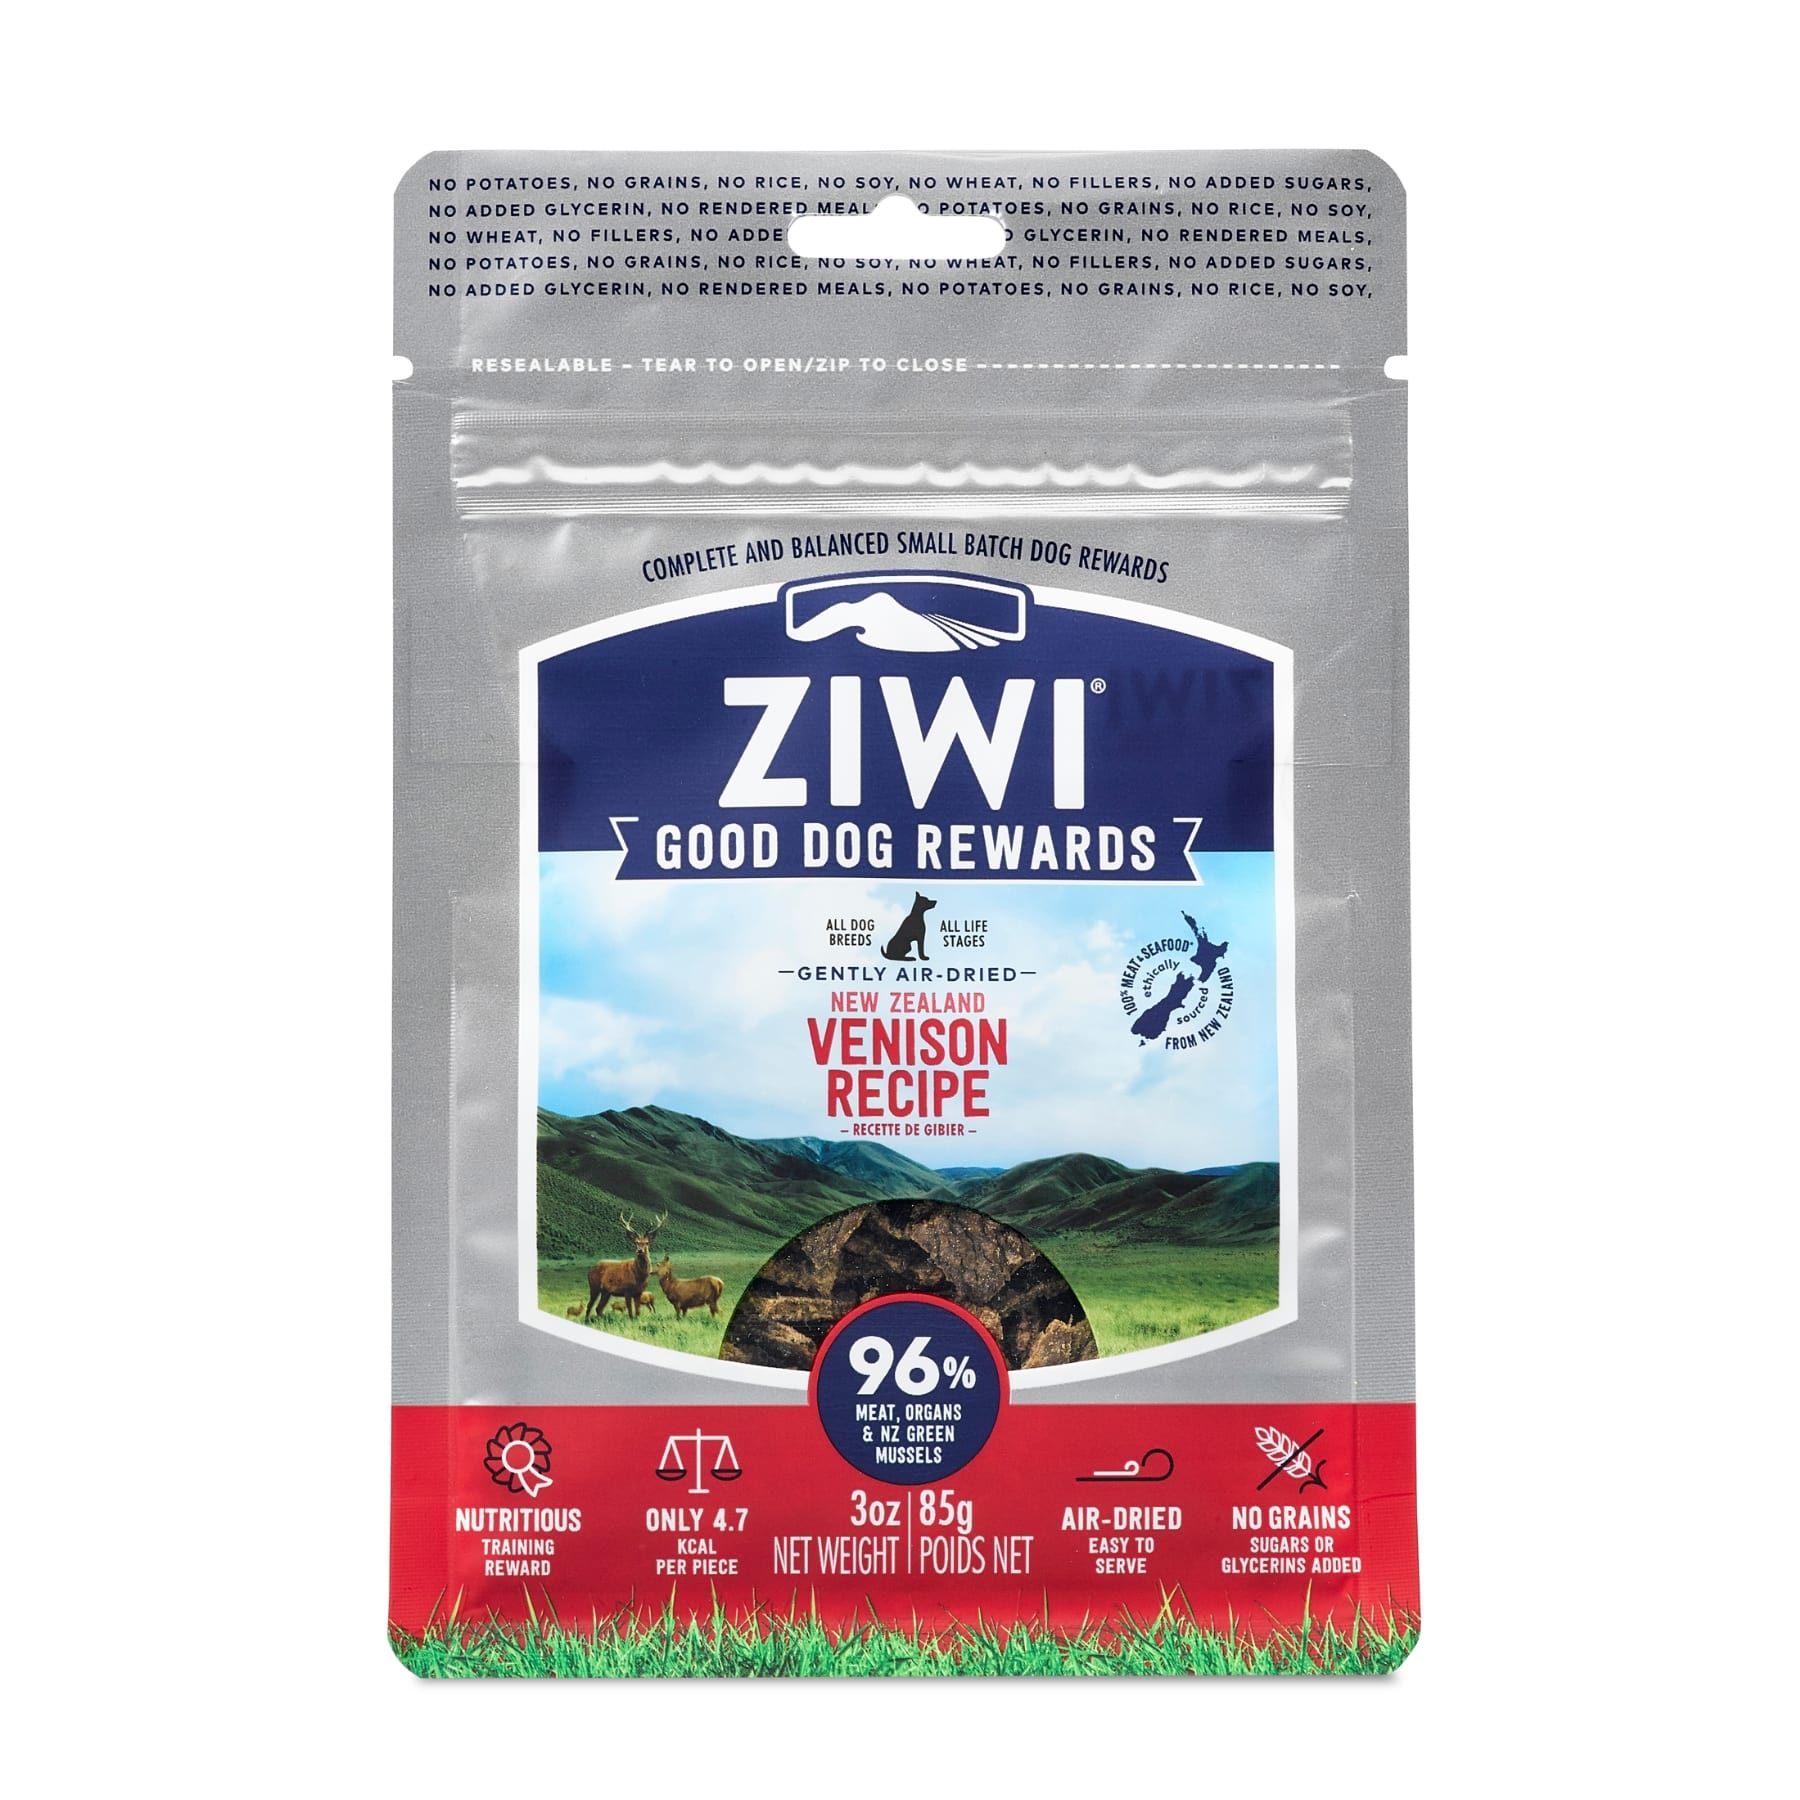 ZIWI Peak Good Dog Rewards Venison Recipe. Premium Treats for Dogs.